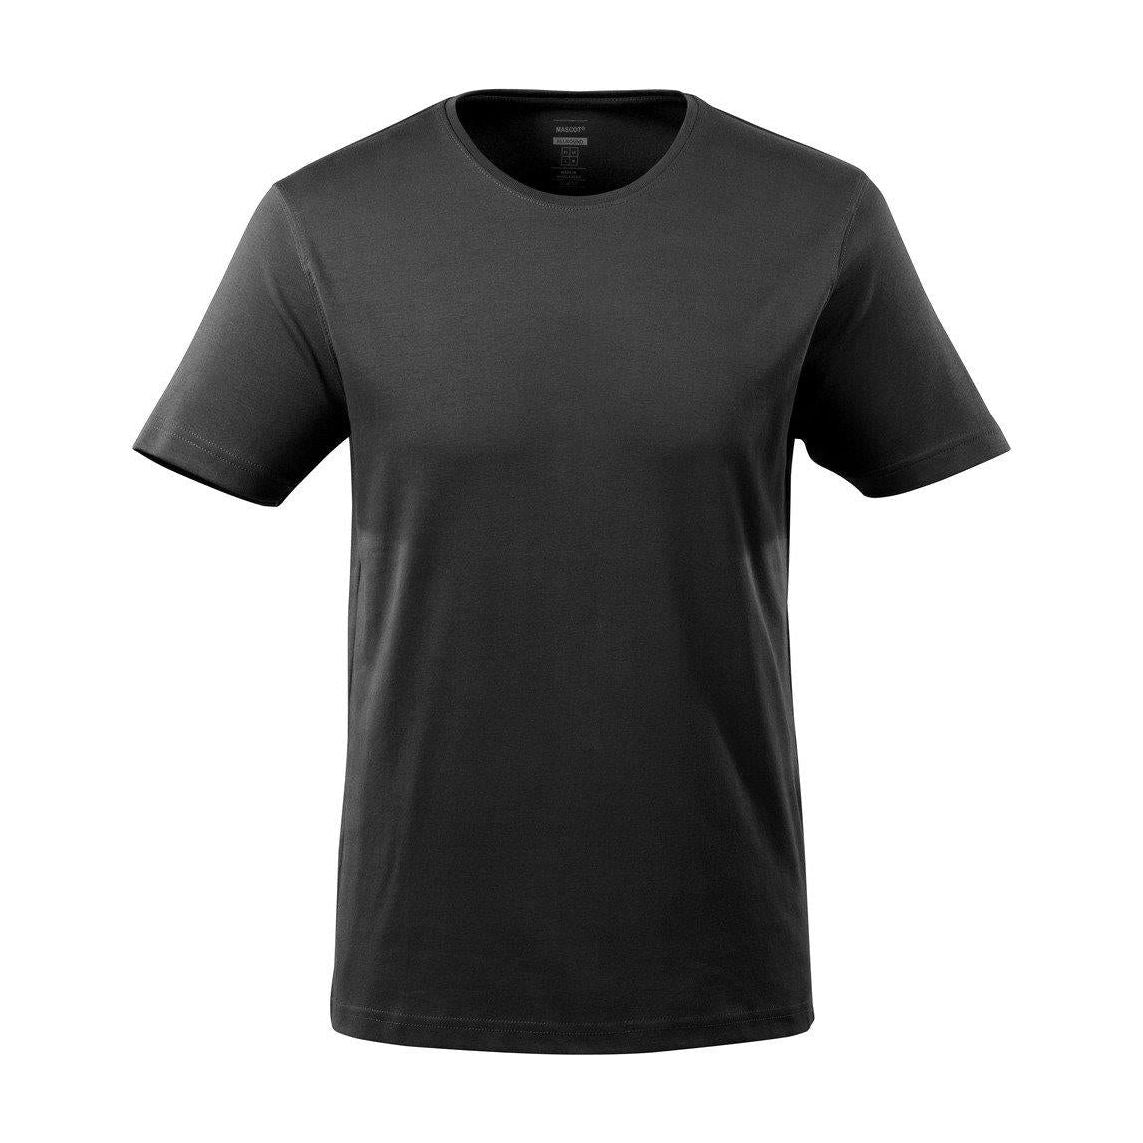 Mascot Vence T-shirt Slim-Fit Black 51585-967-09 Front